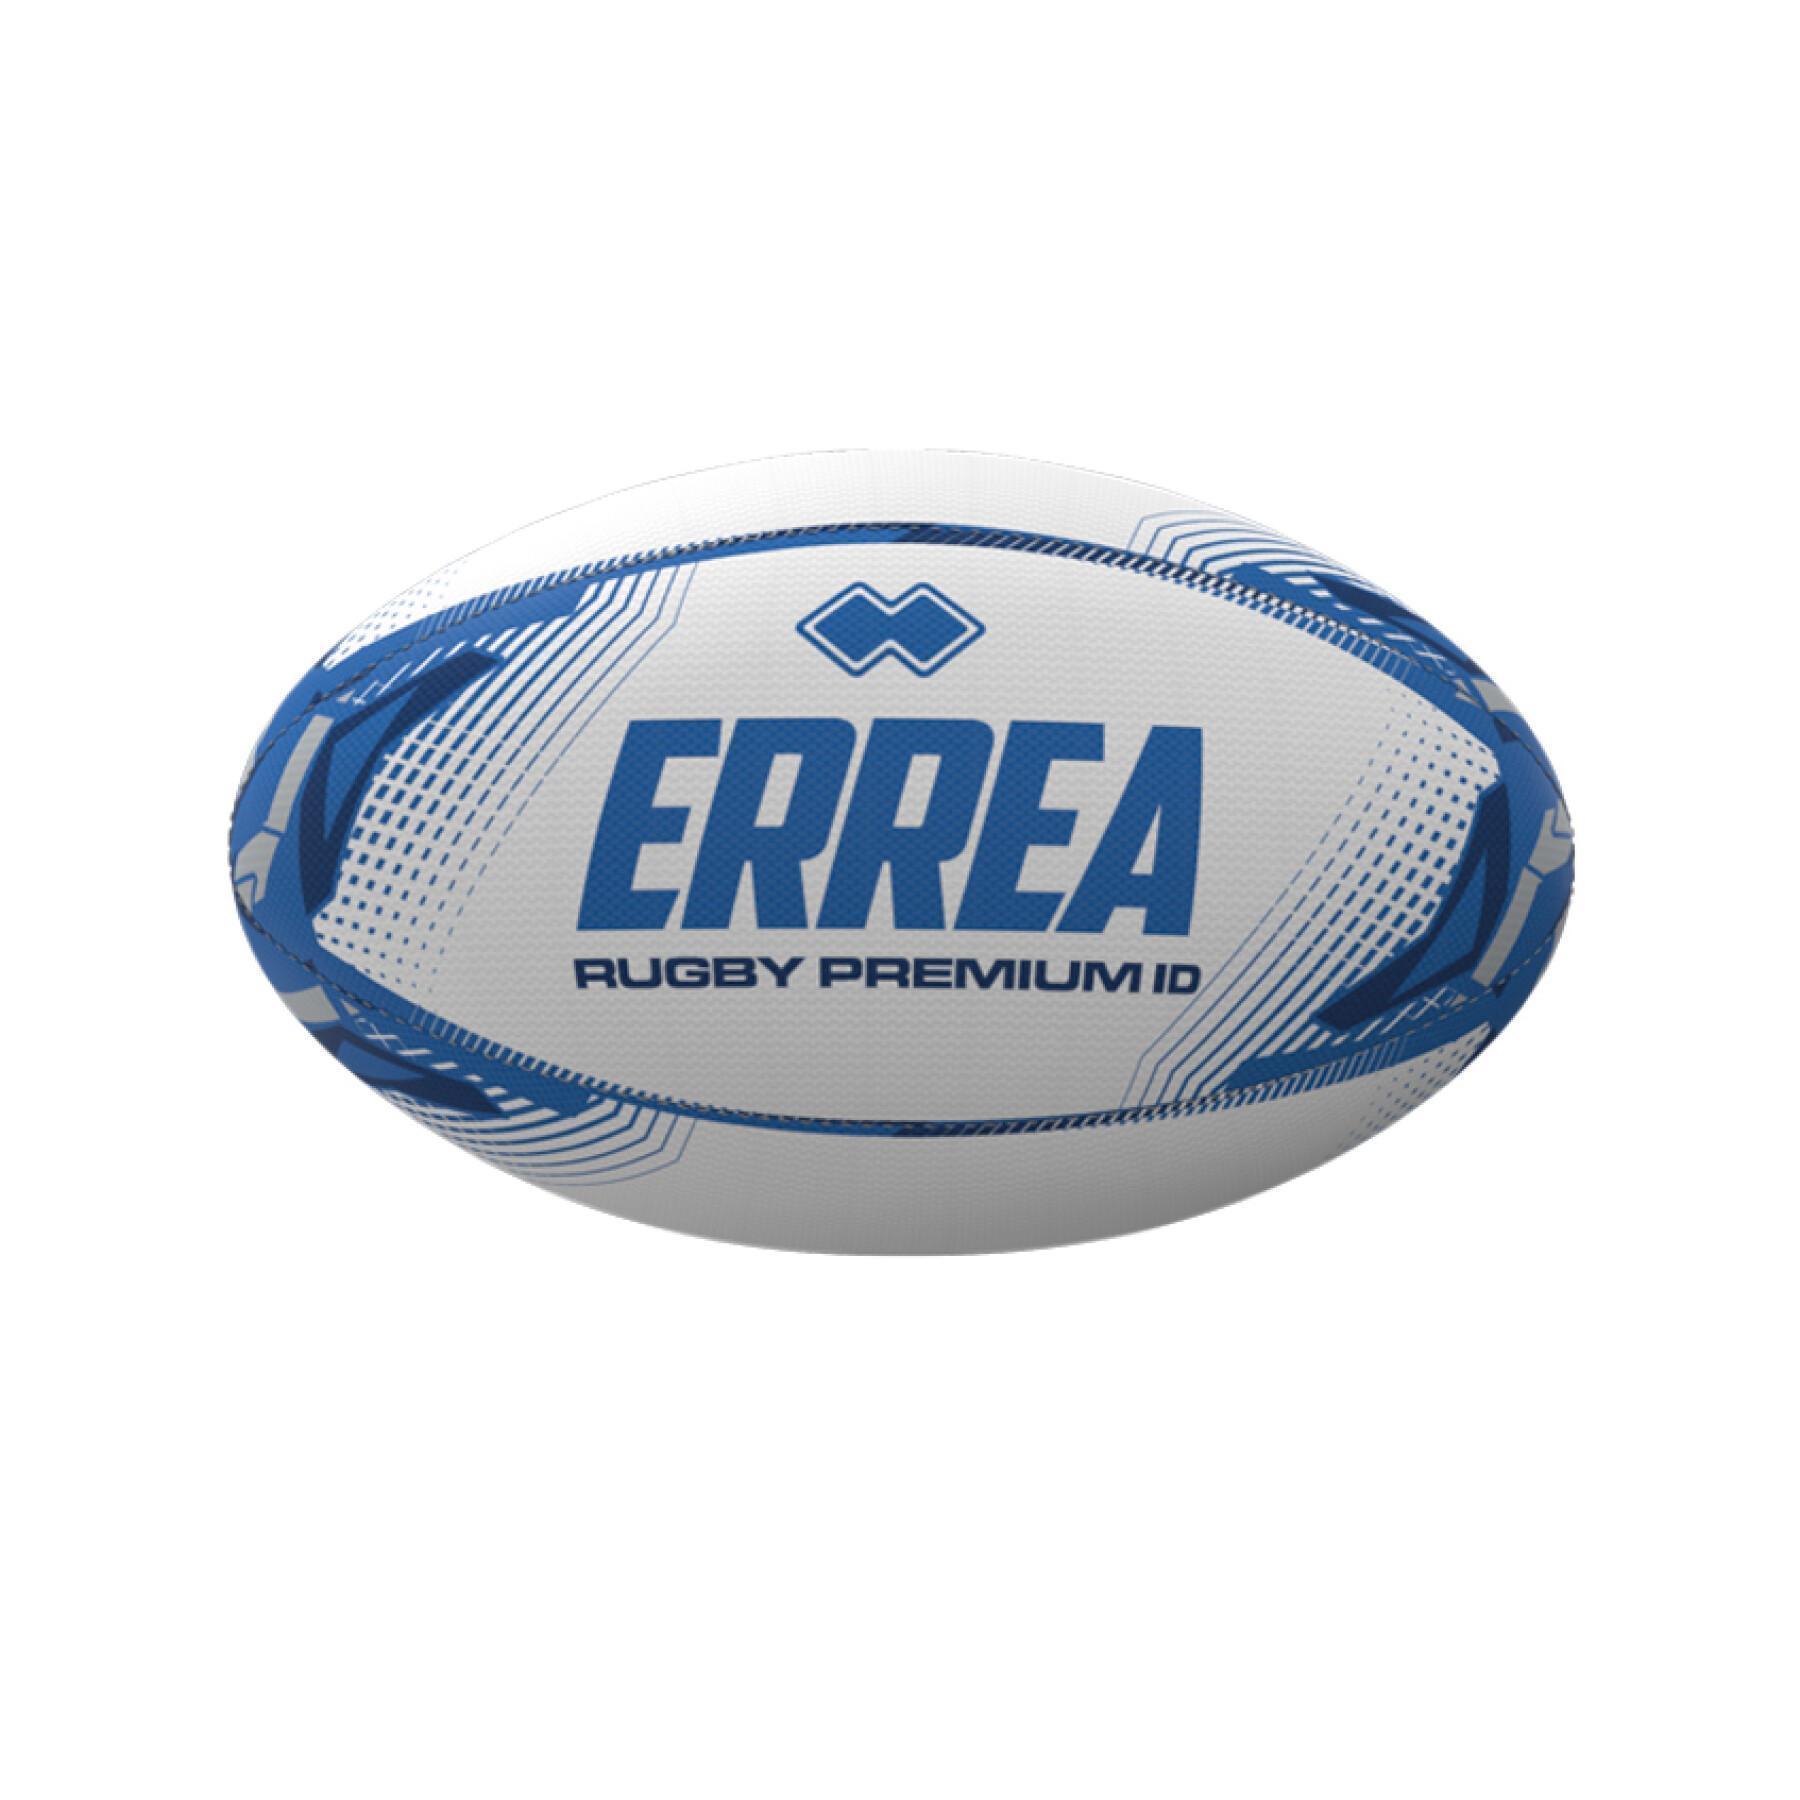 Rugby Ball Errea Premium Top Grip